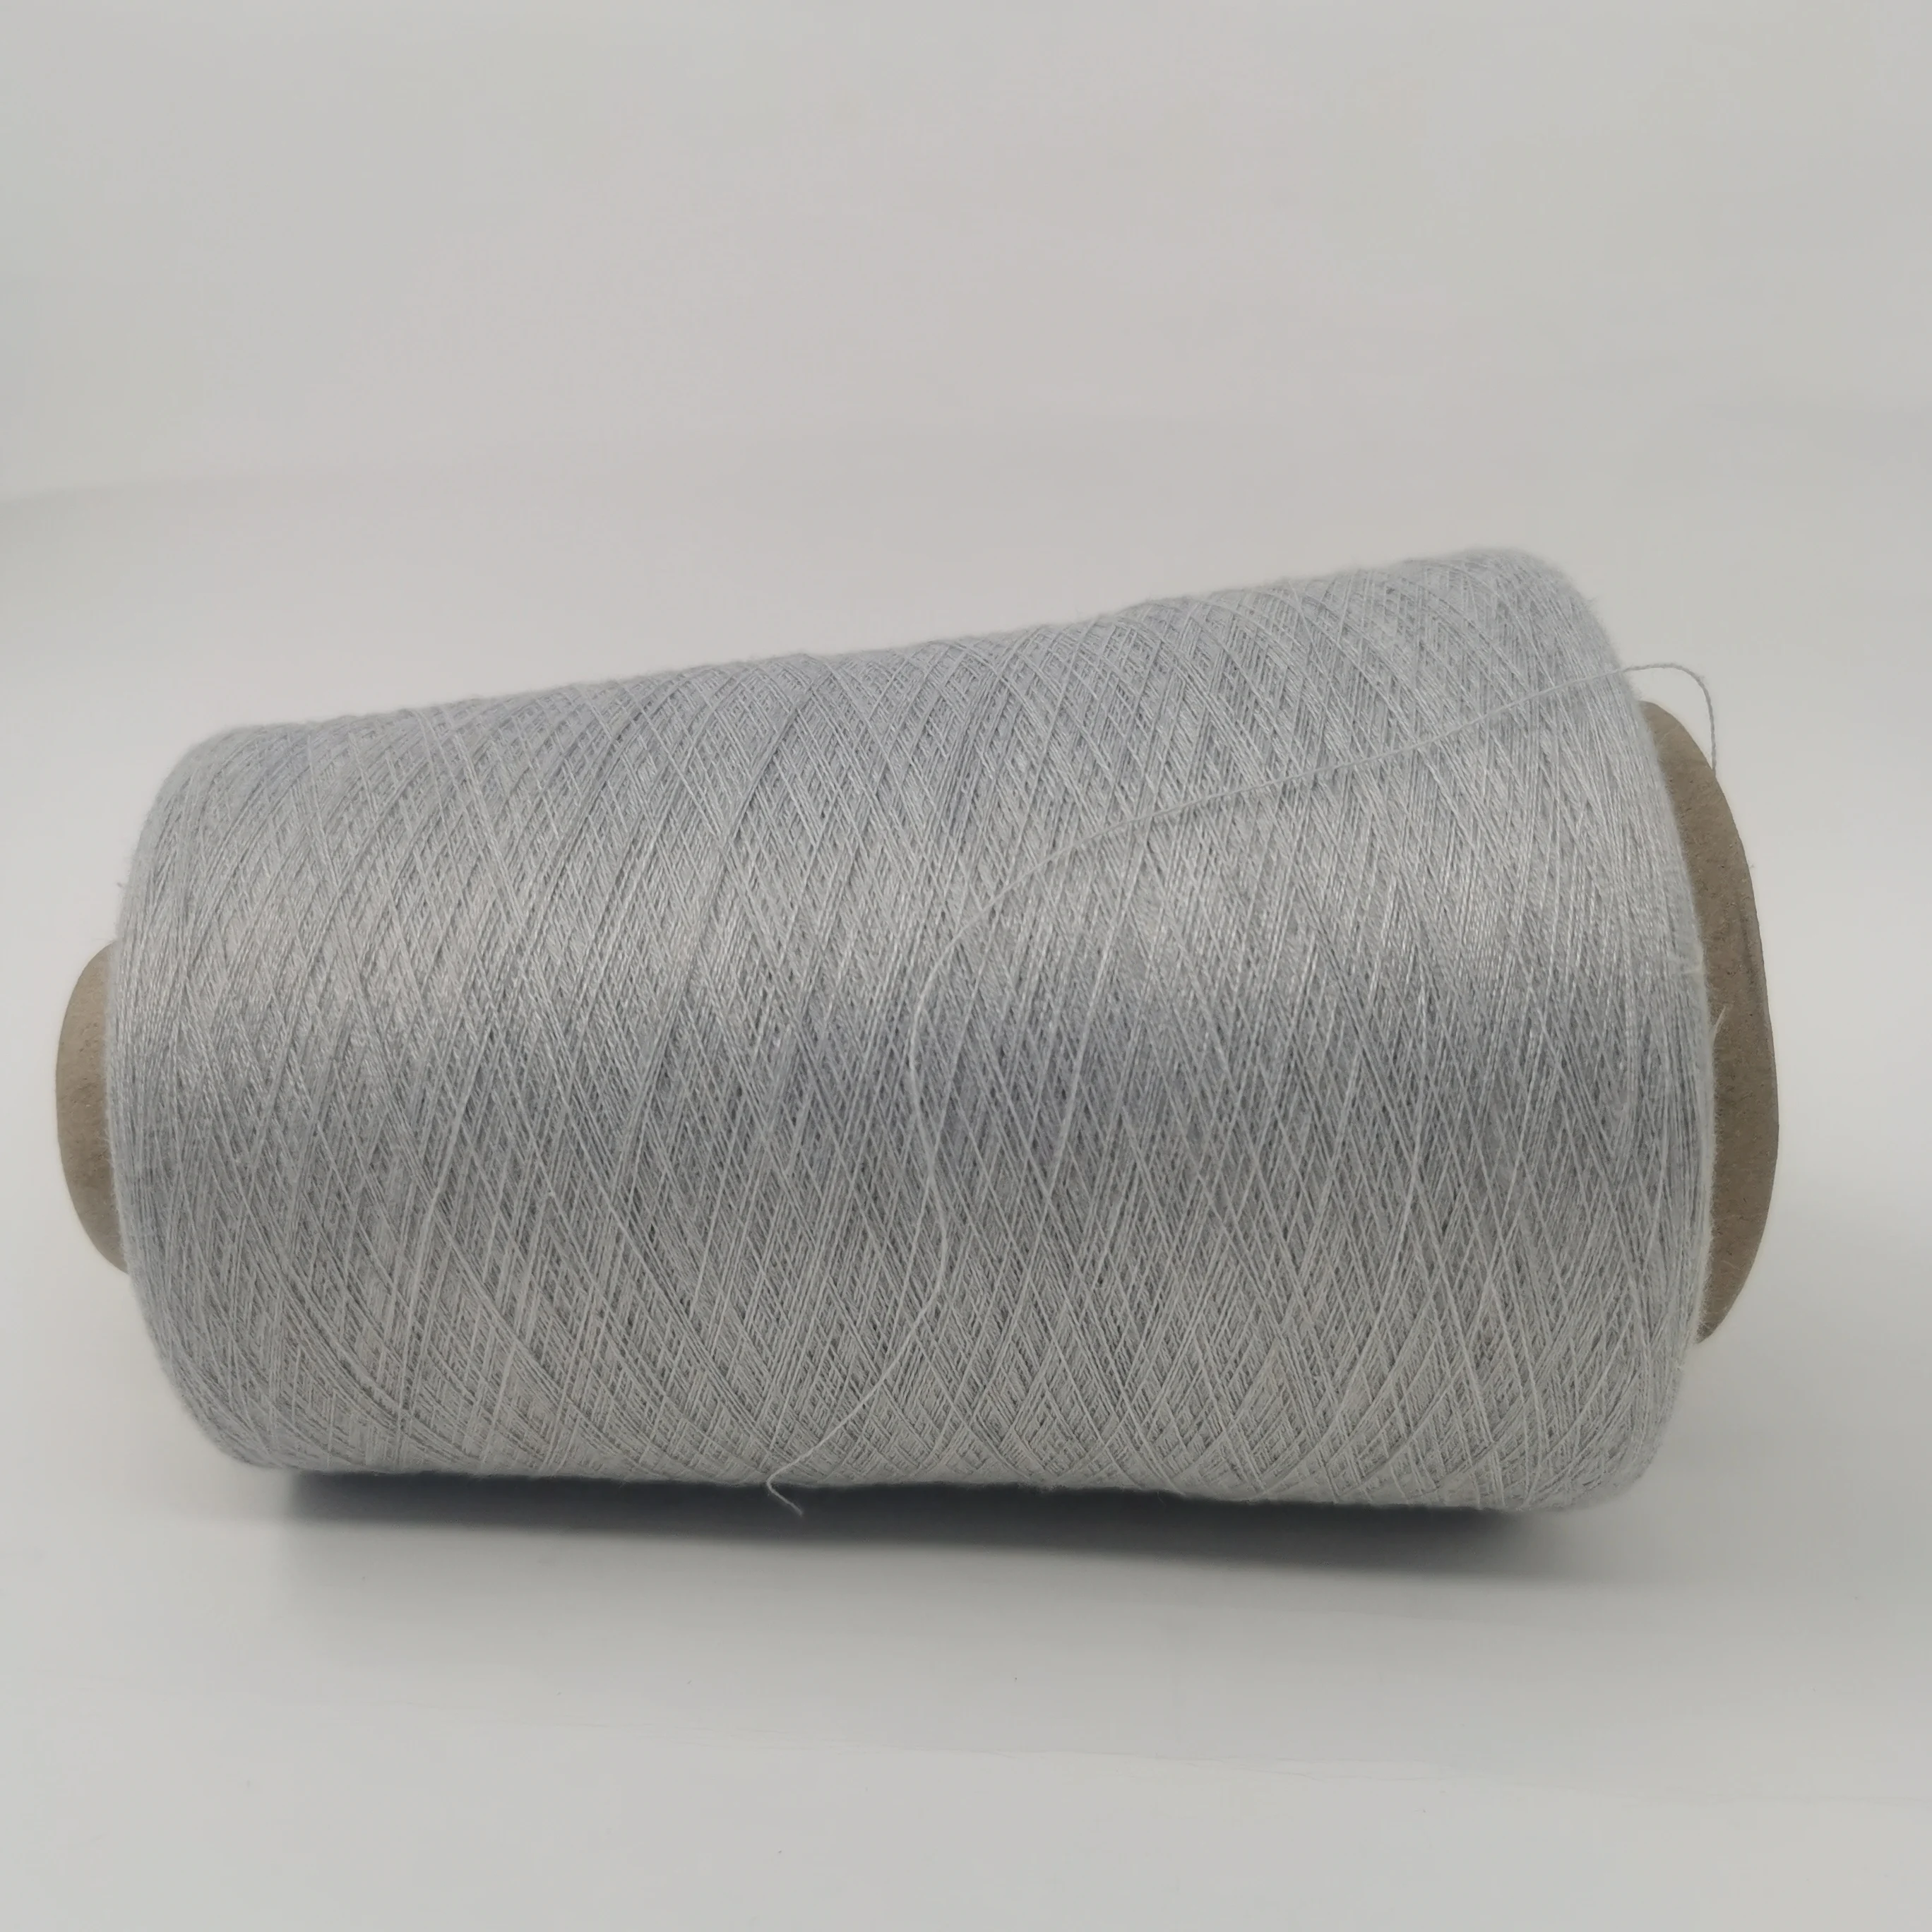 anti static filter weaving fabric conductive yarn sew thread